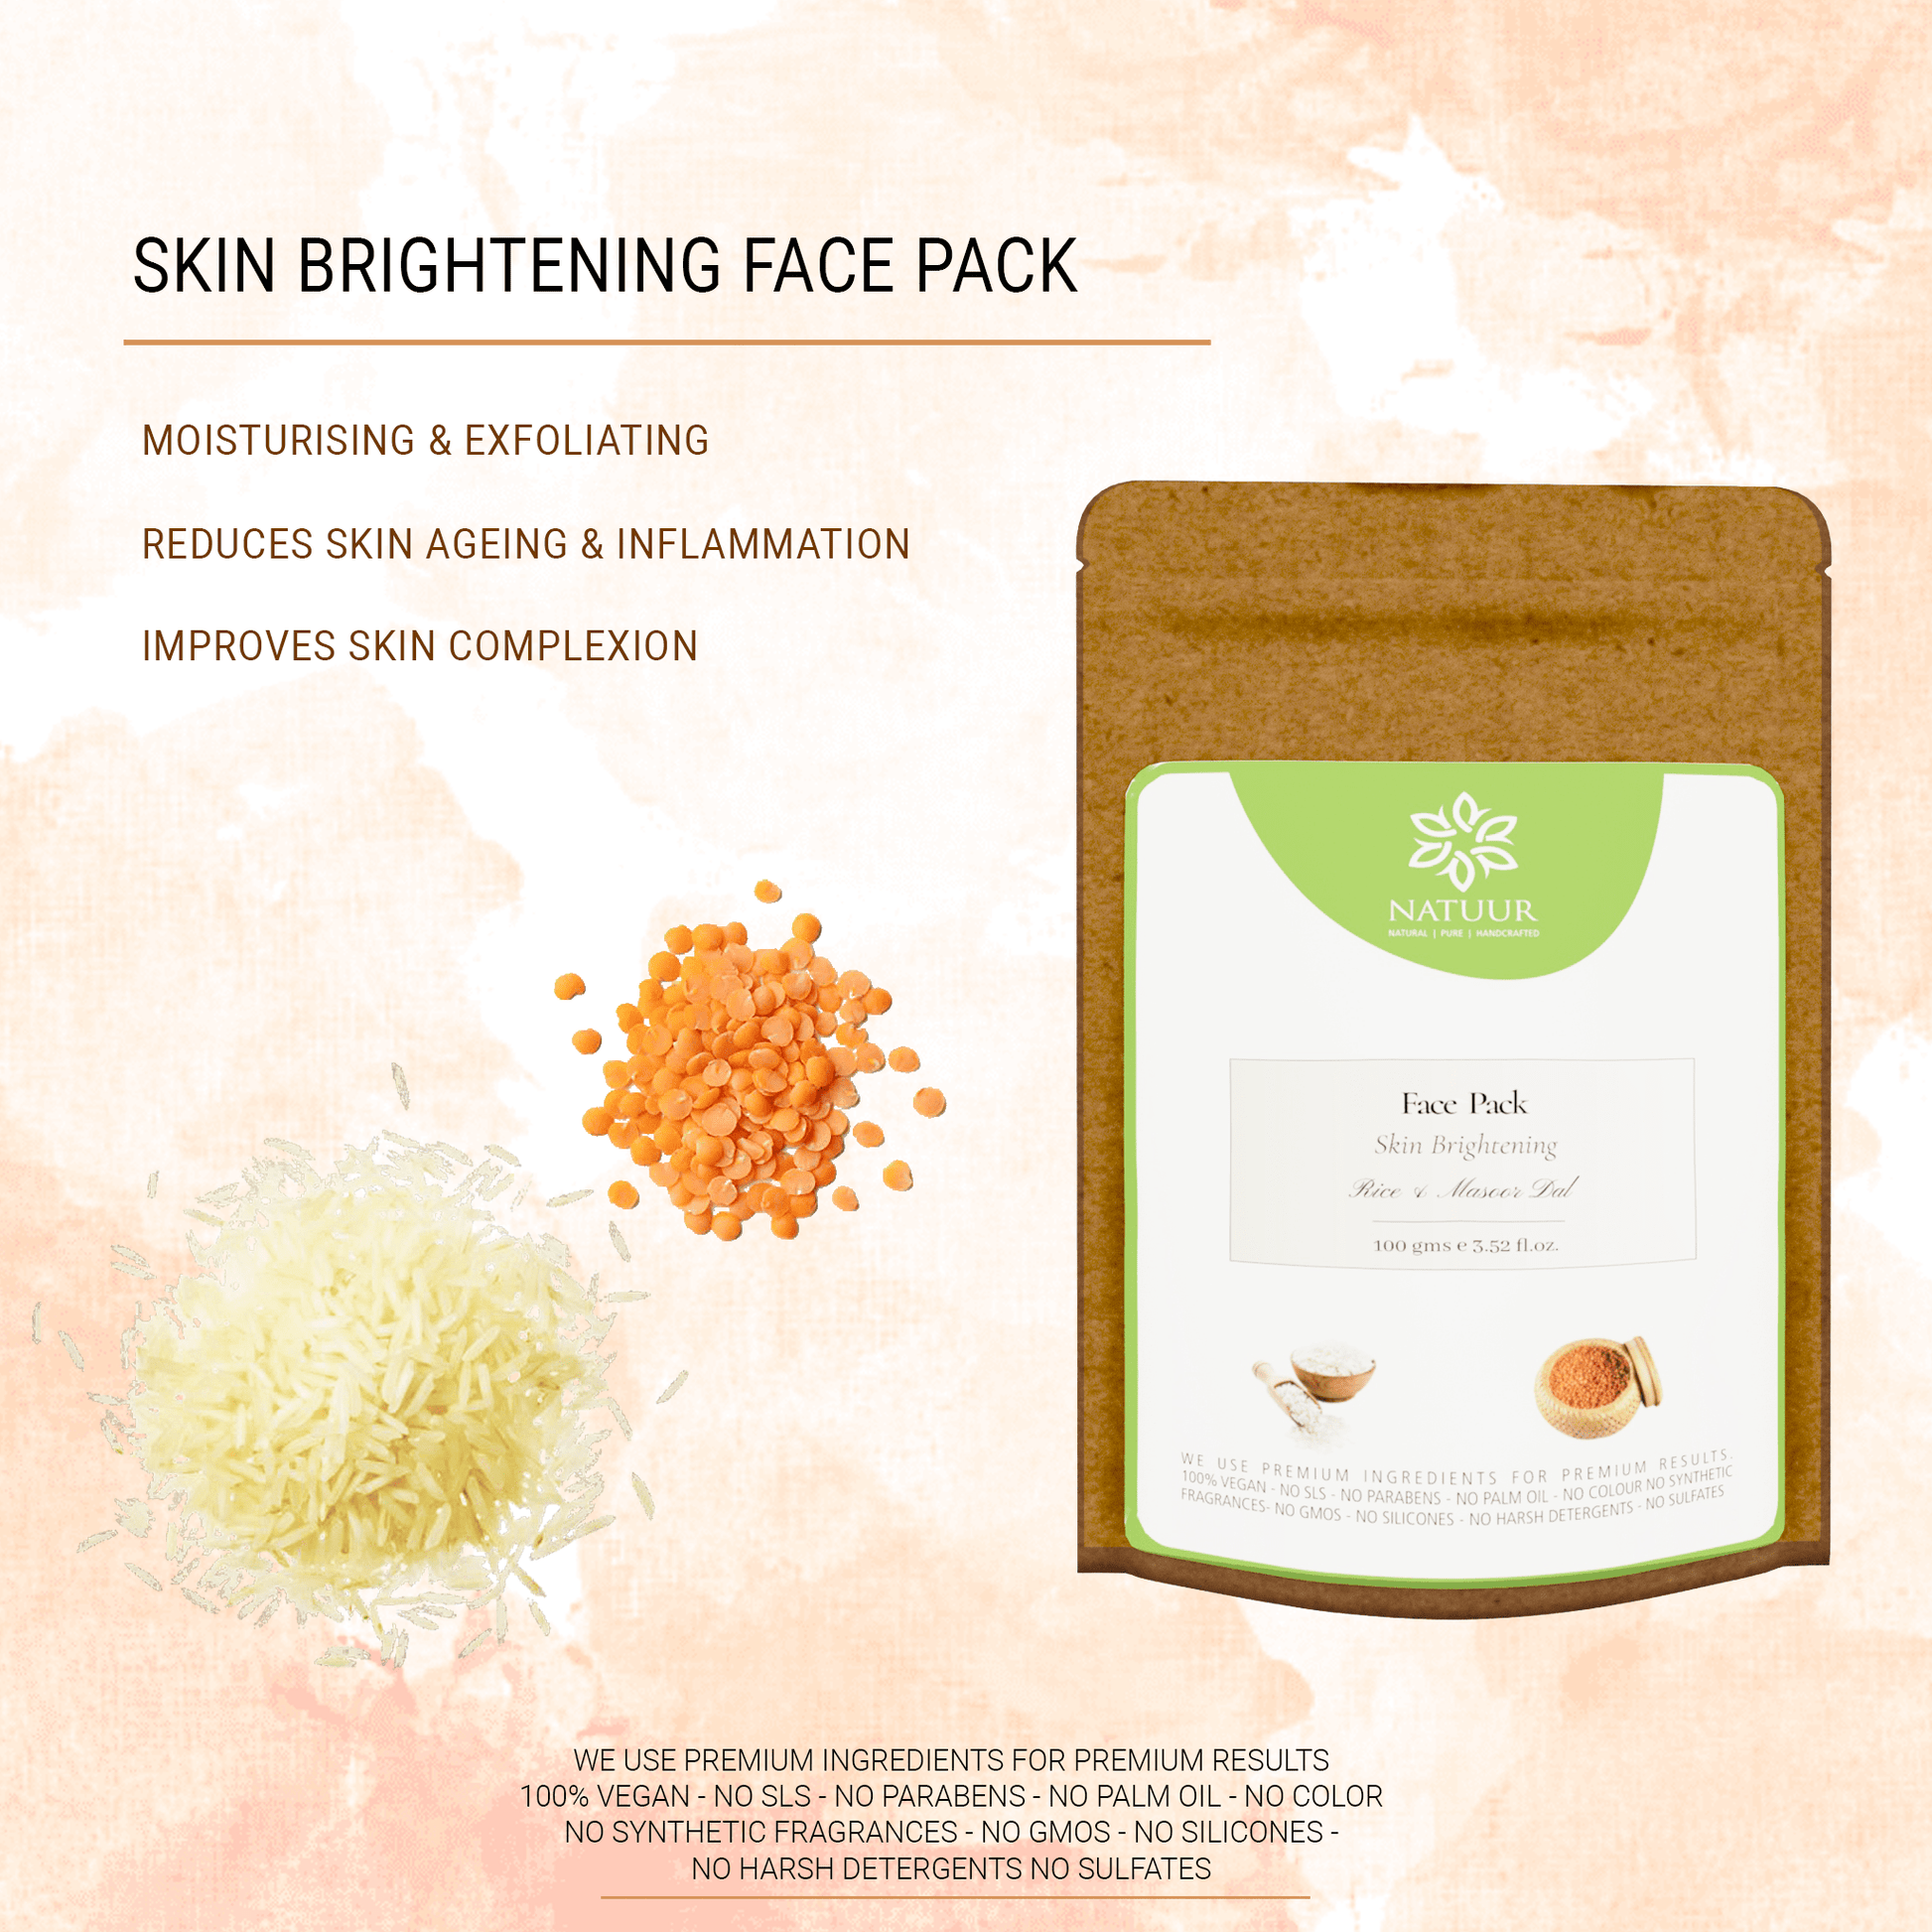 Face Pack Rice & Masoor Dal - Skin Brightening  100 gms - Natuur.in